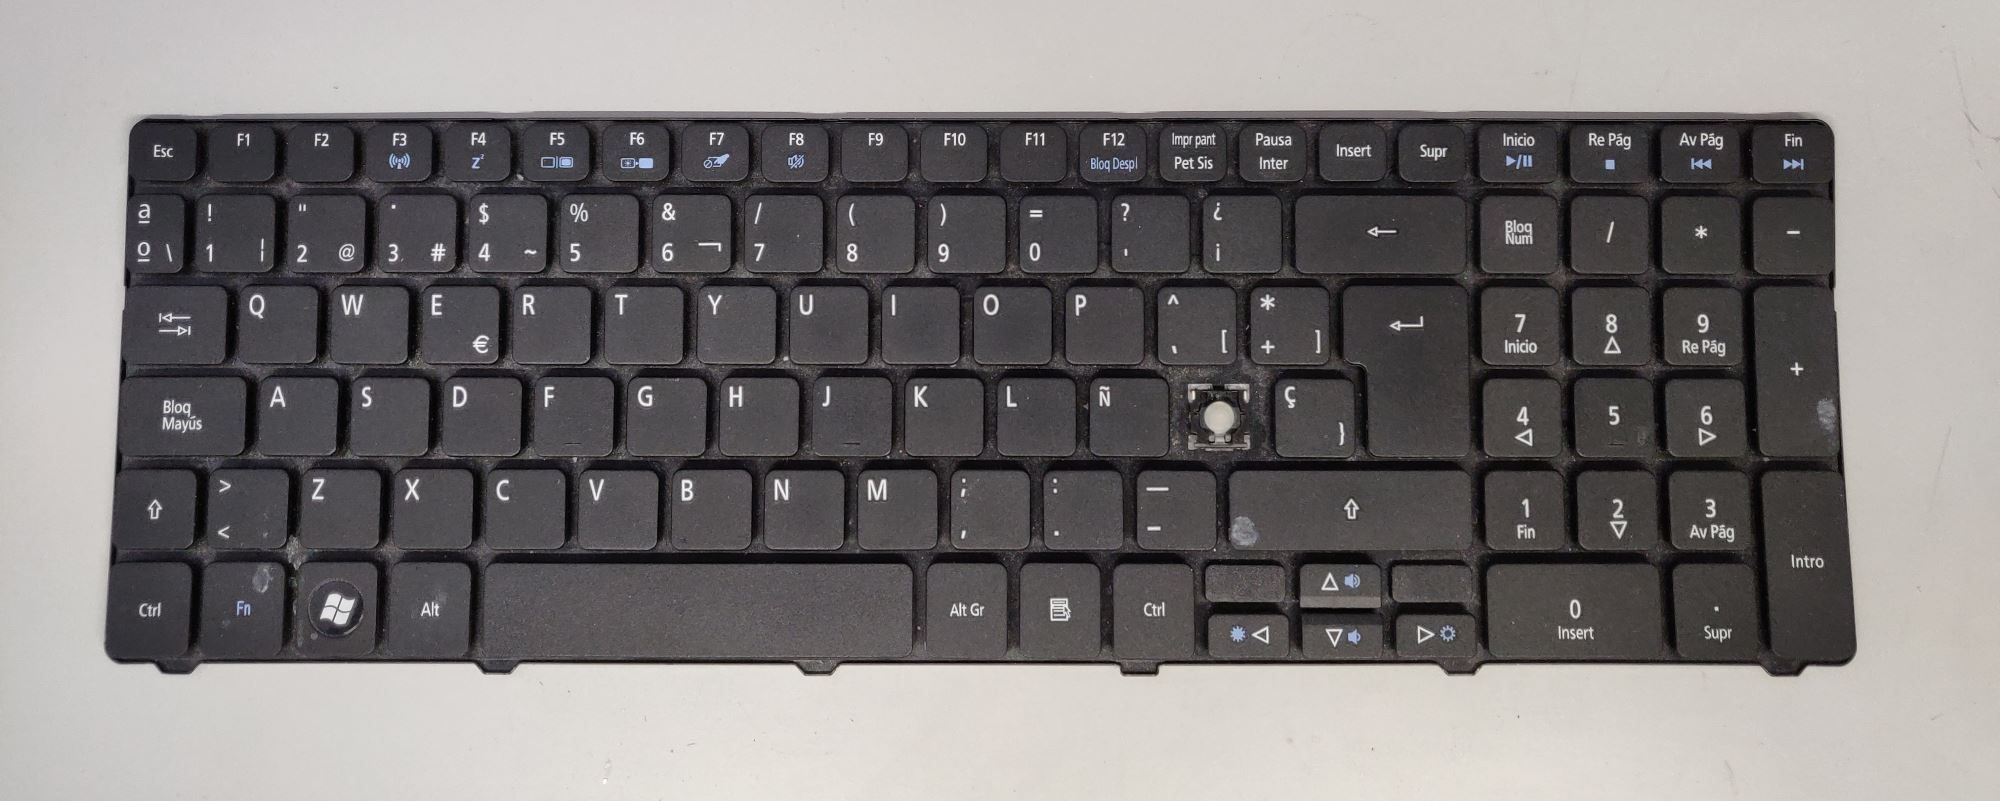 teclado de portatil estropeado